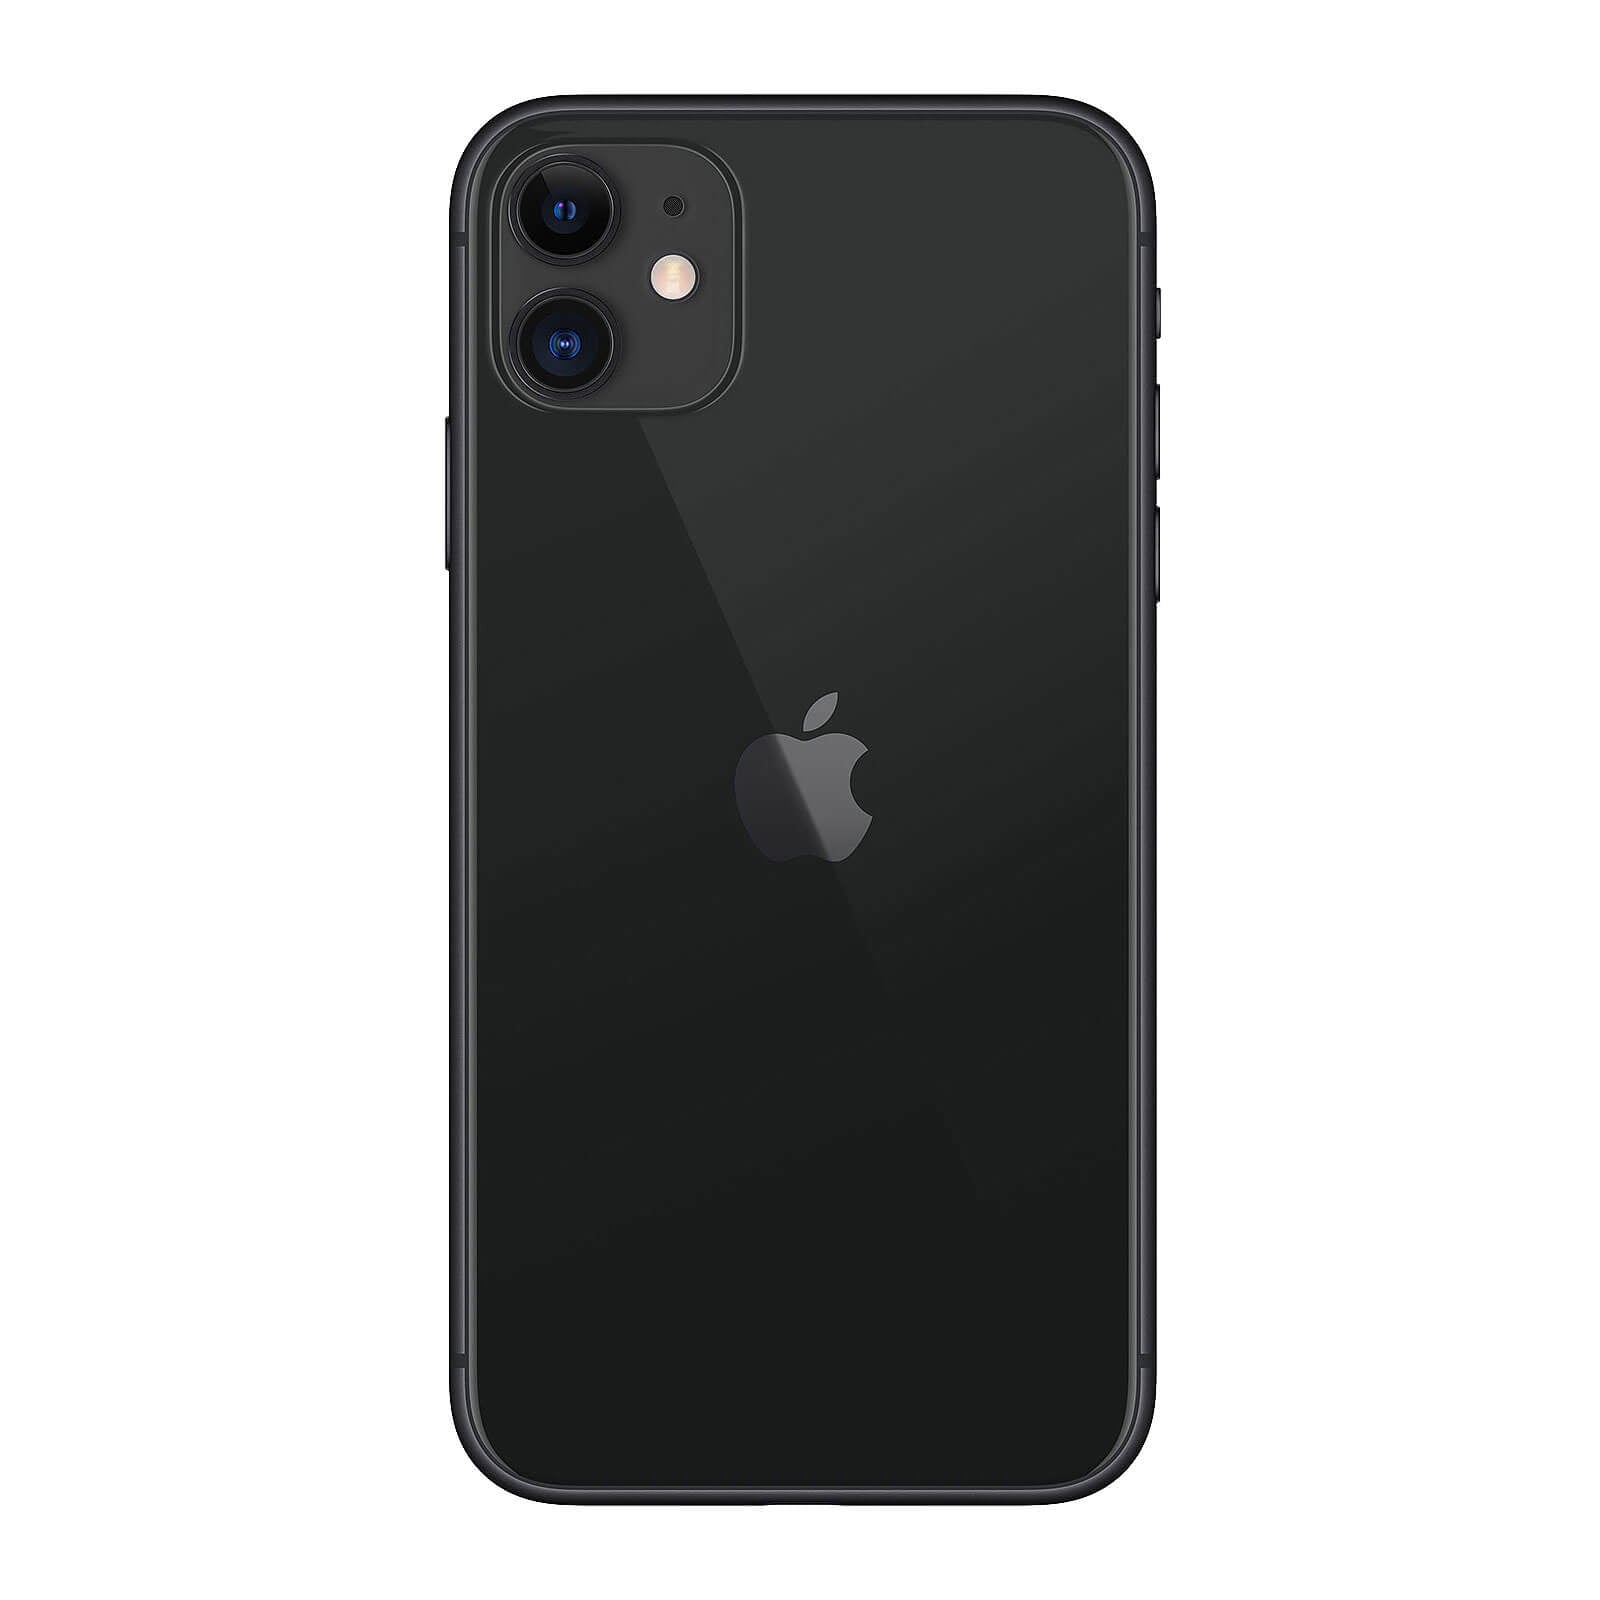 Apple iPhone 11 64GB Black Good - Sprint